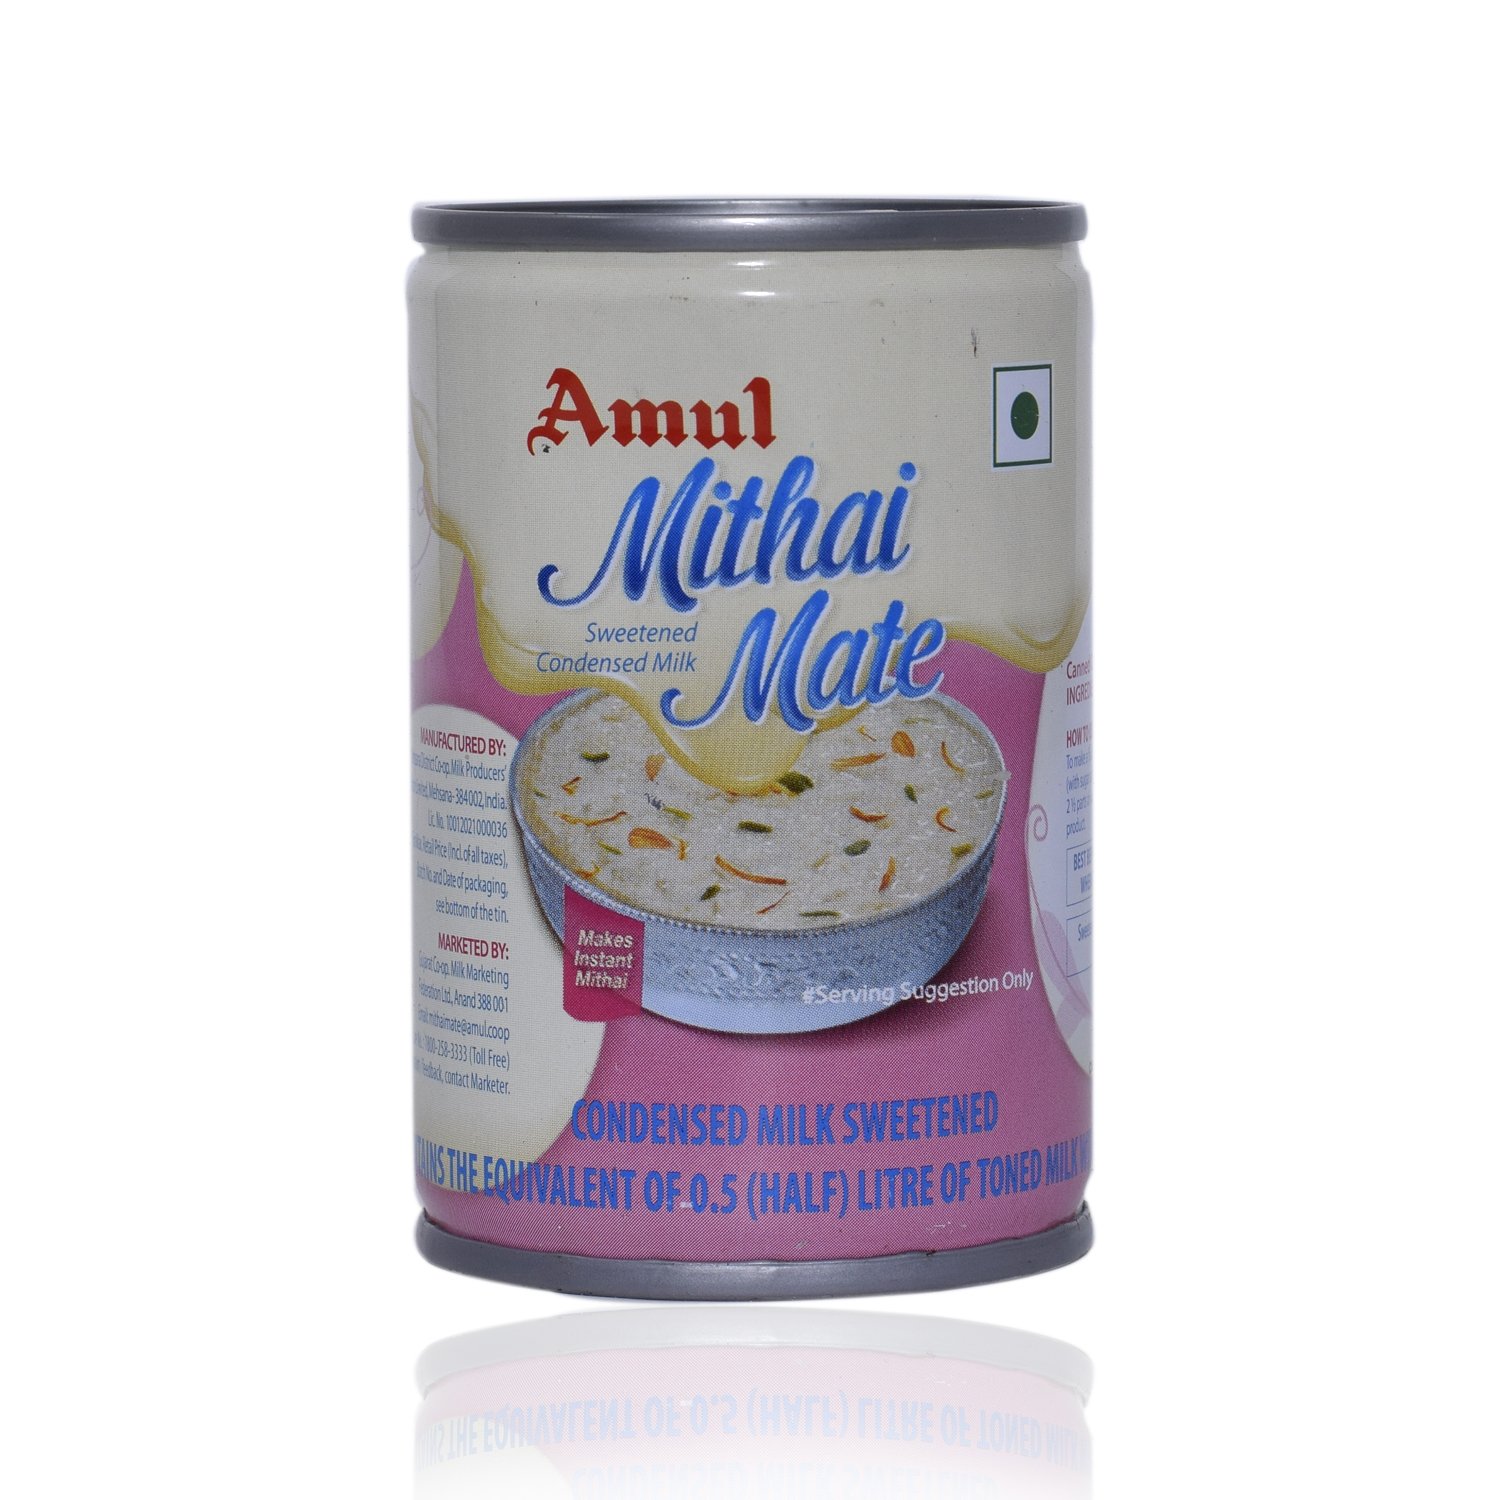 Amul Mithai Mate – Sweetened Condensed Milk, 200g Tin